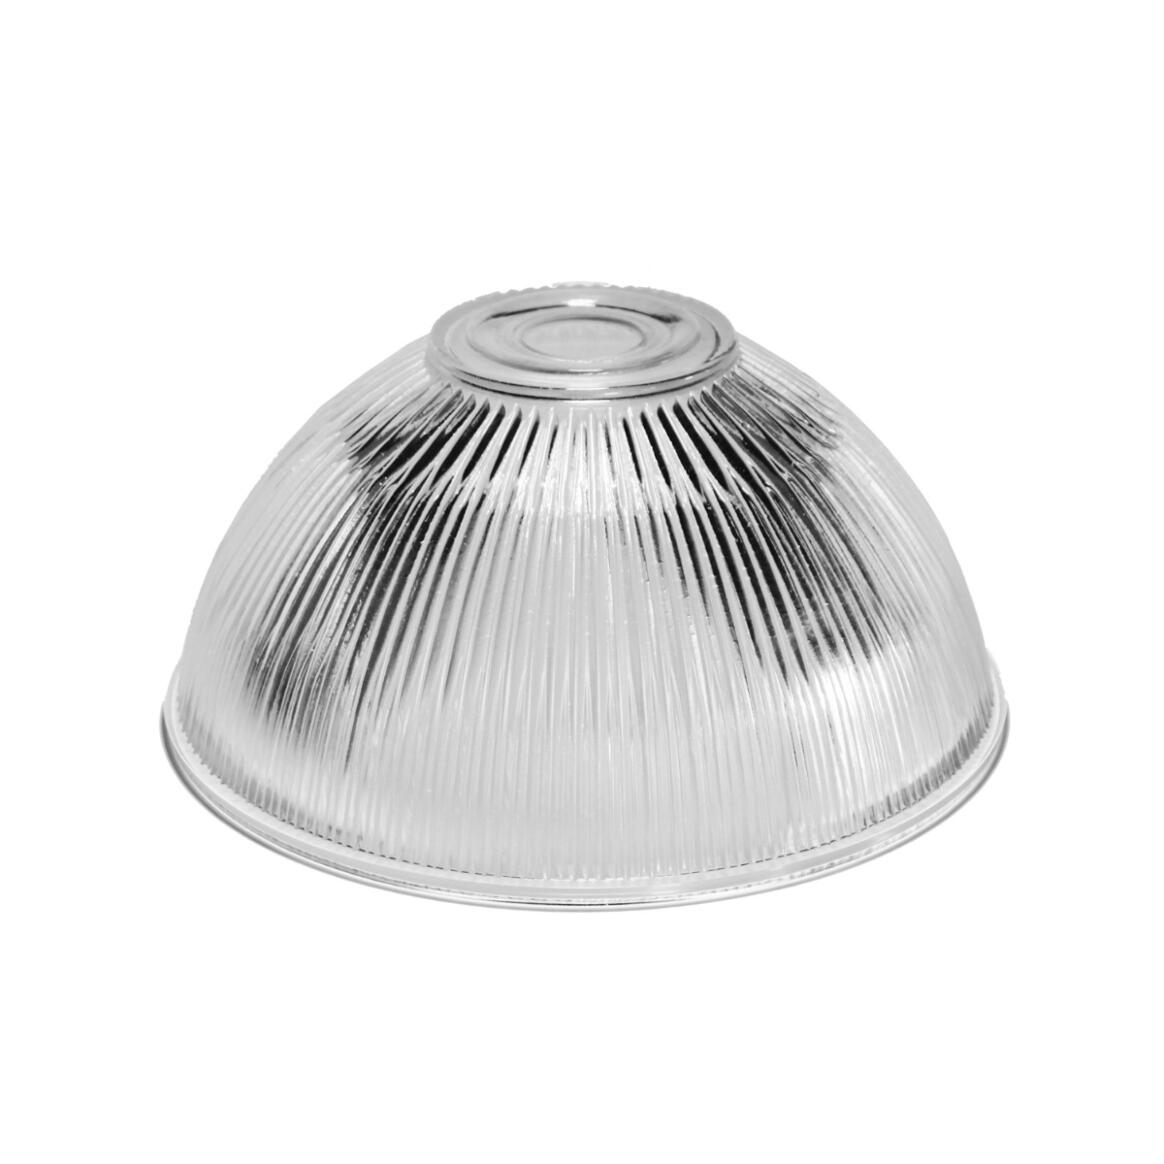 Holophane glass lamp shade 19.5cm main product image